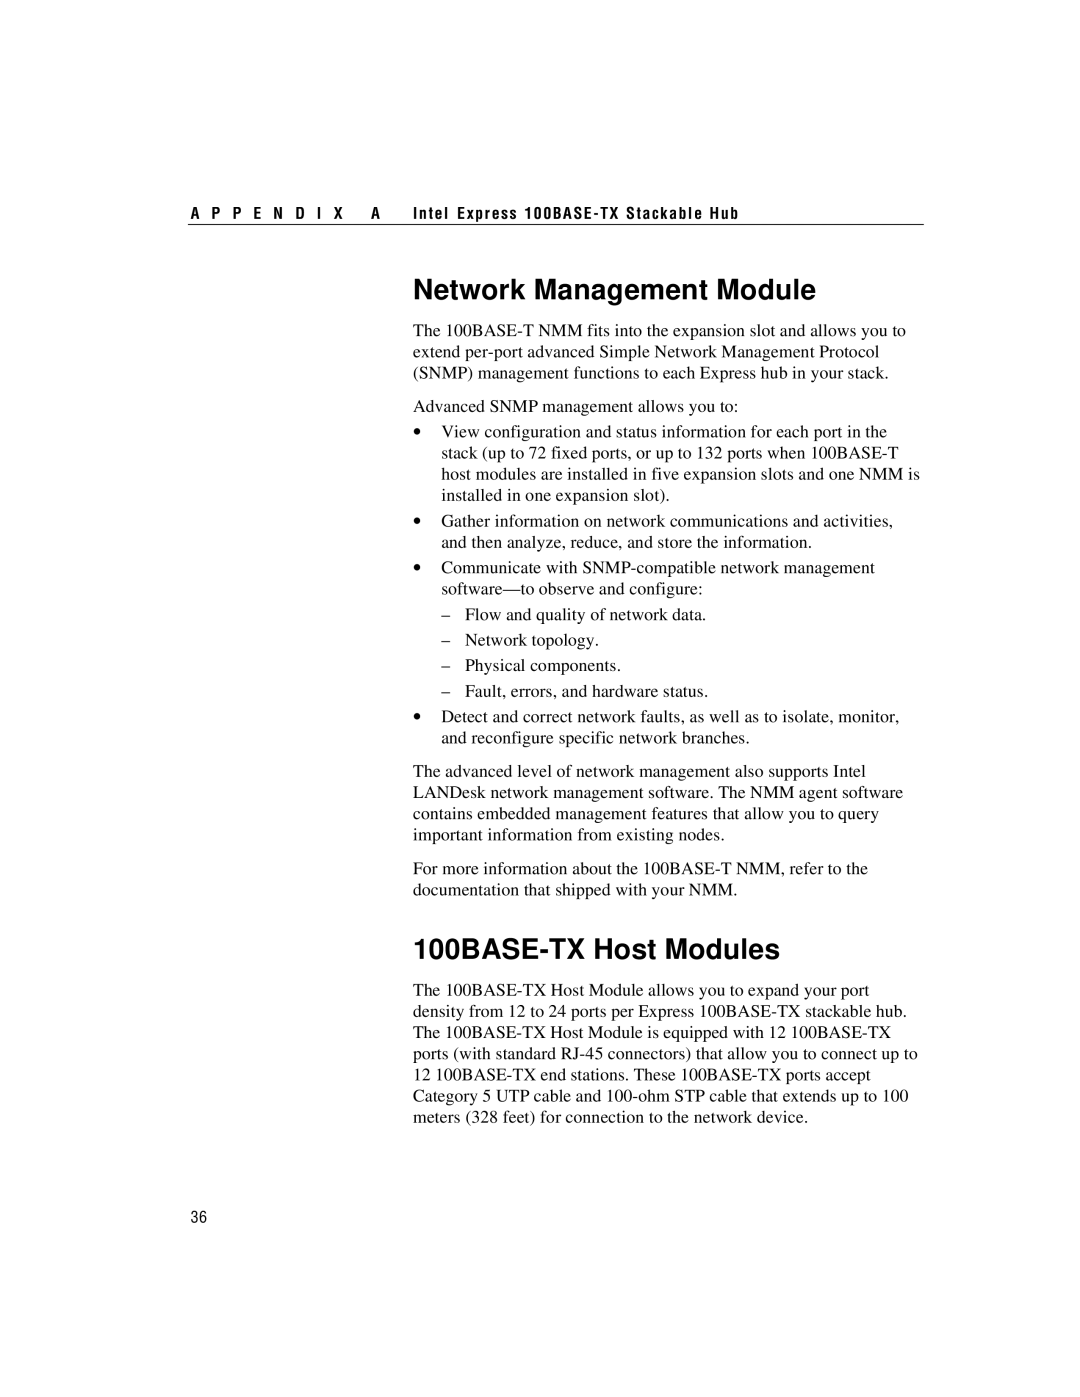 Intel manual Network Management Module, 100BASE-TXHost Modules 